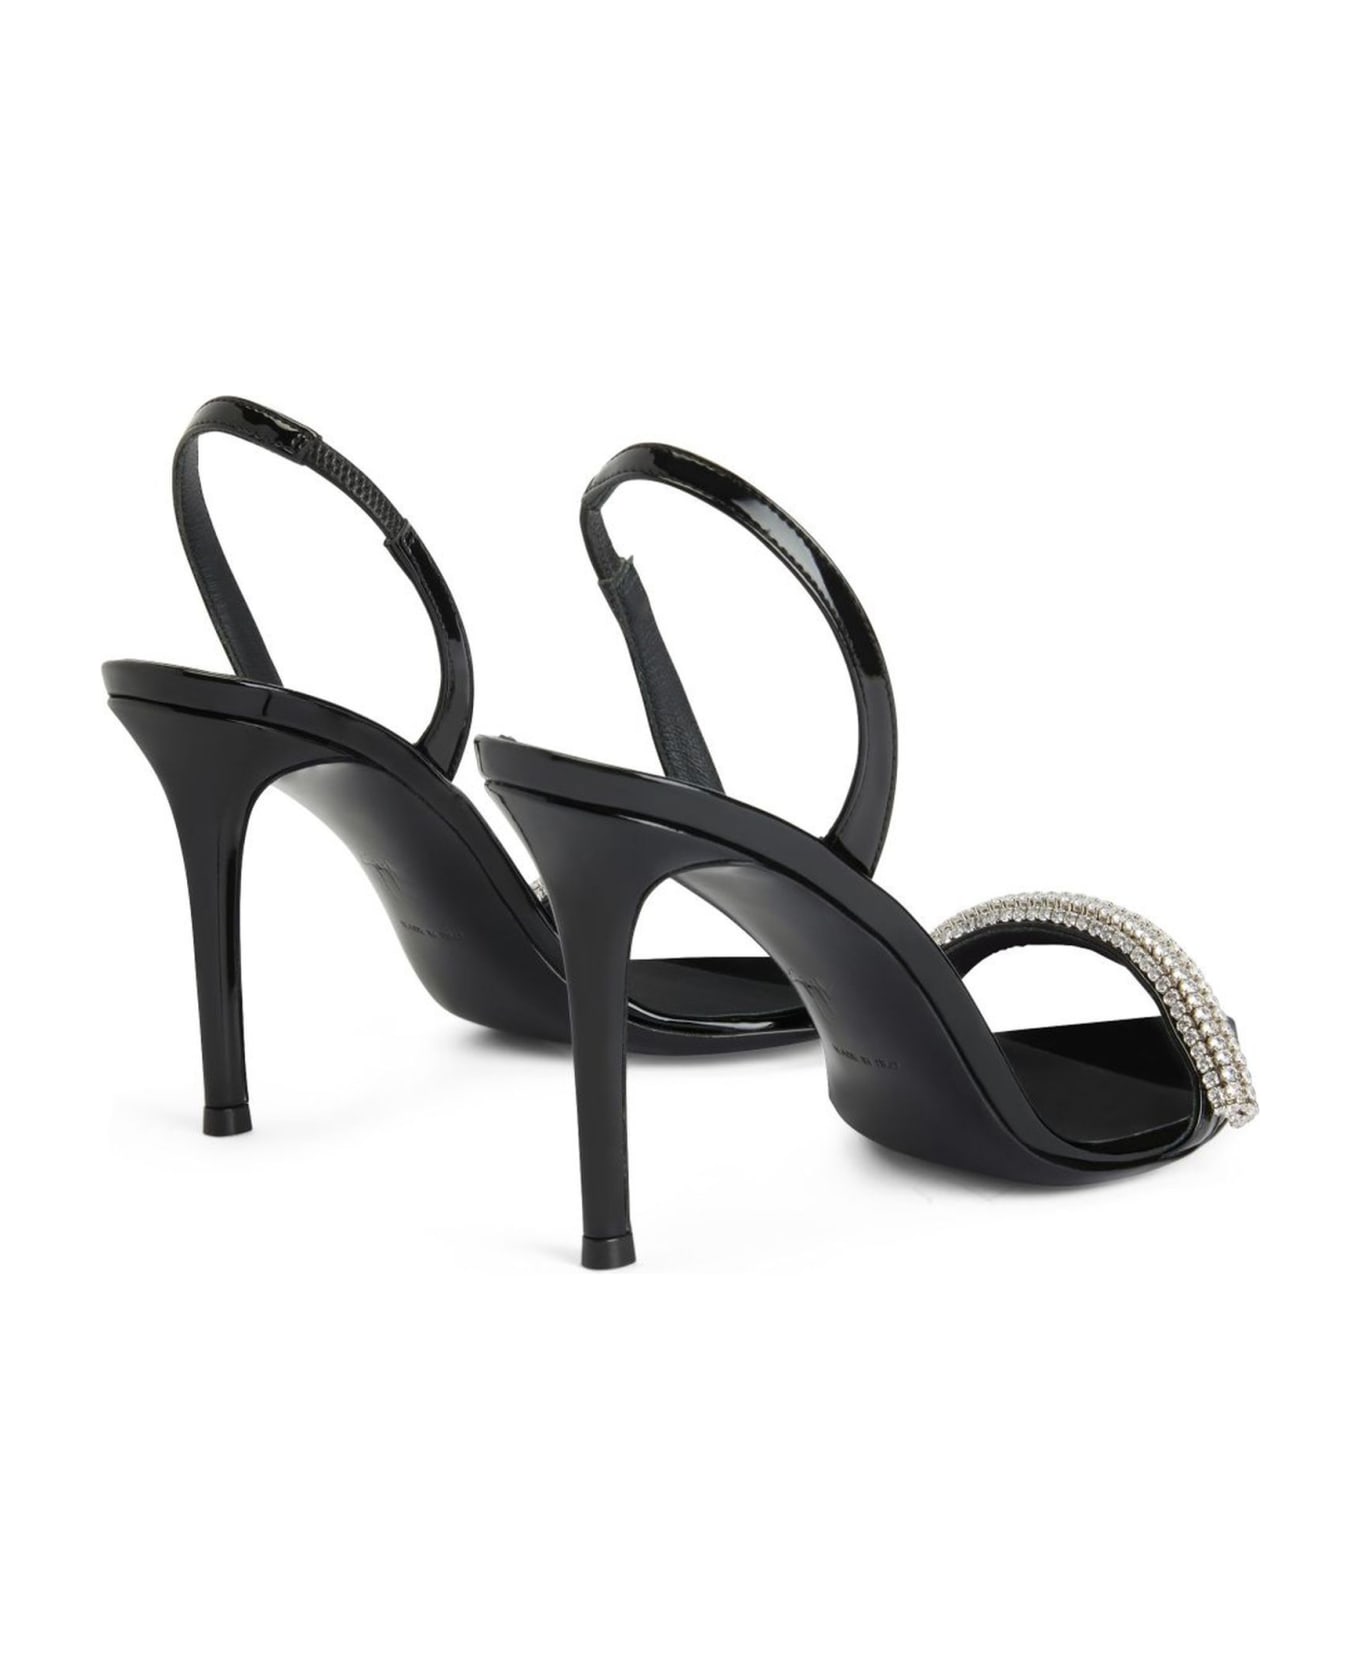 Giuseppe Zanotti Black Patent Leather Slingback Sandals - Black サンダル